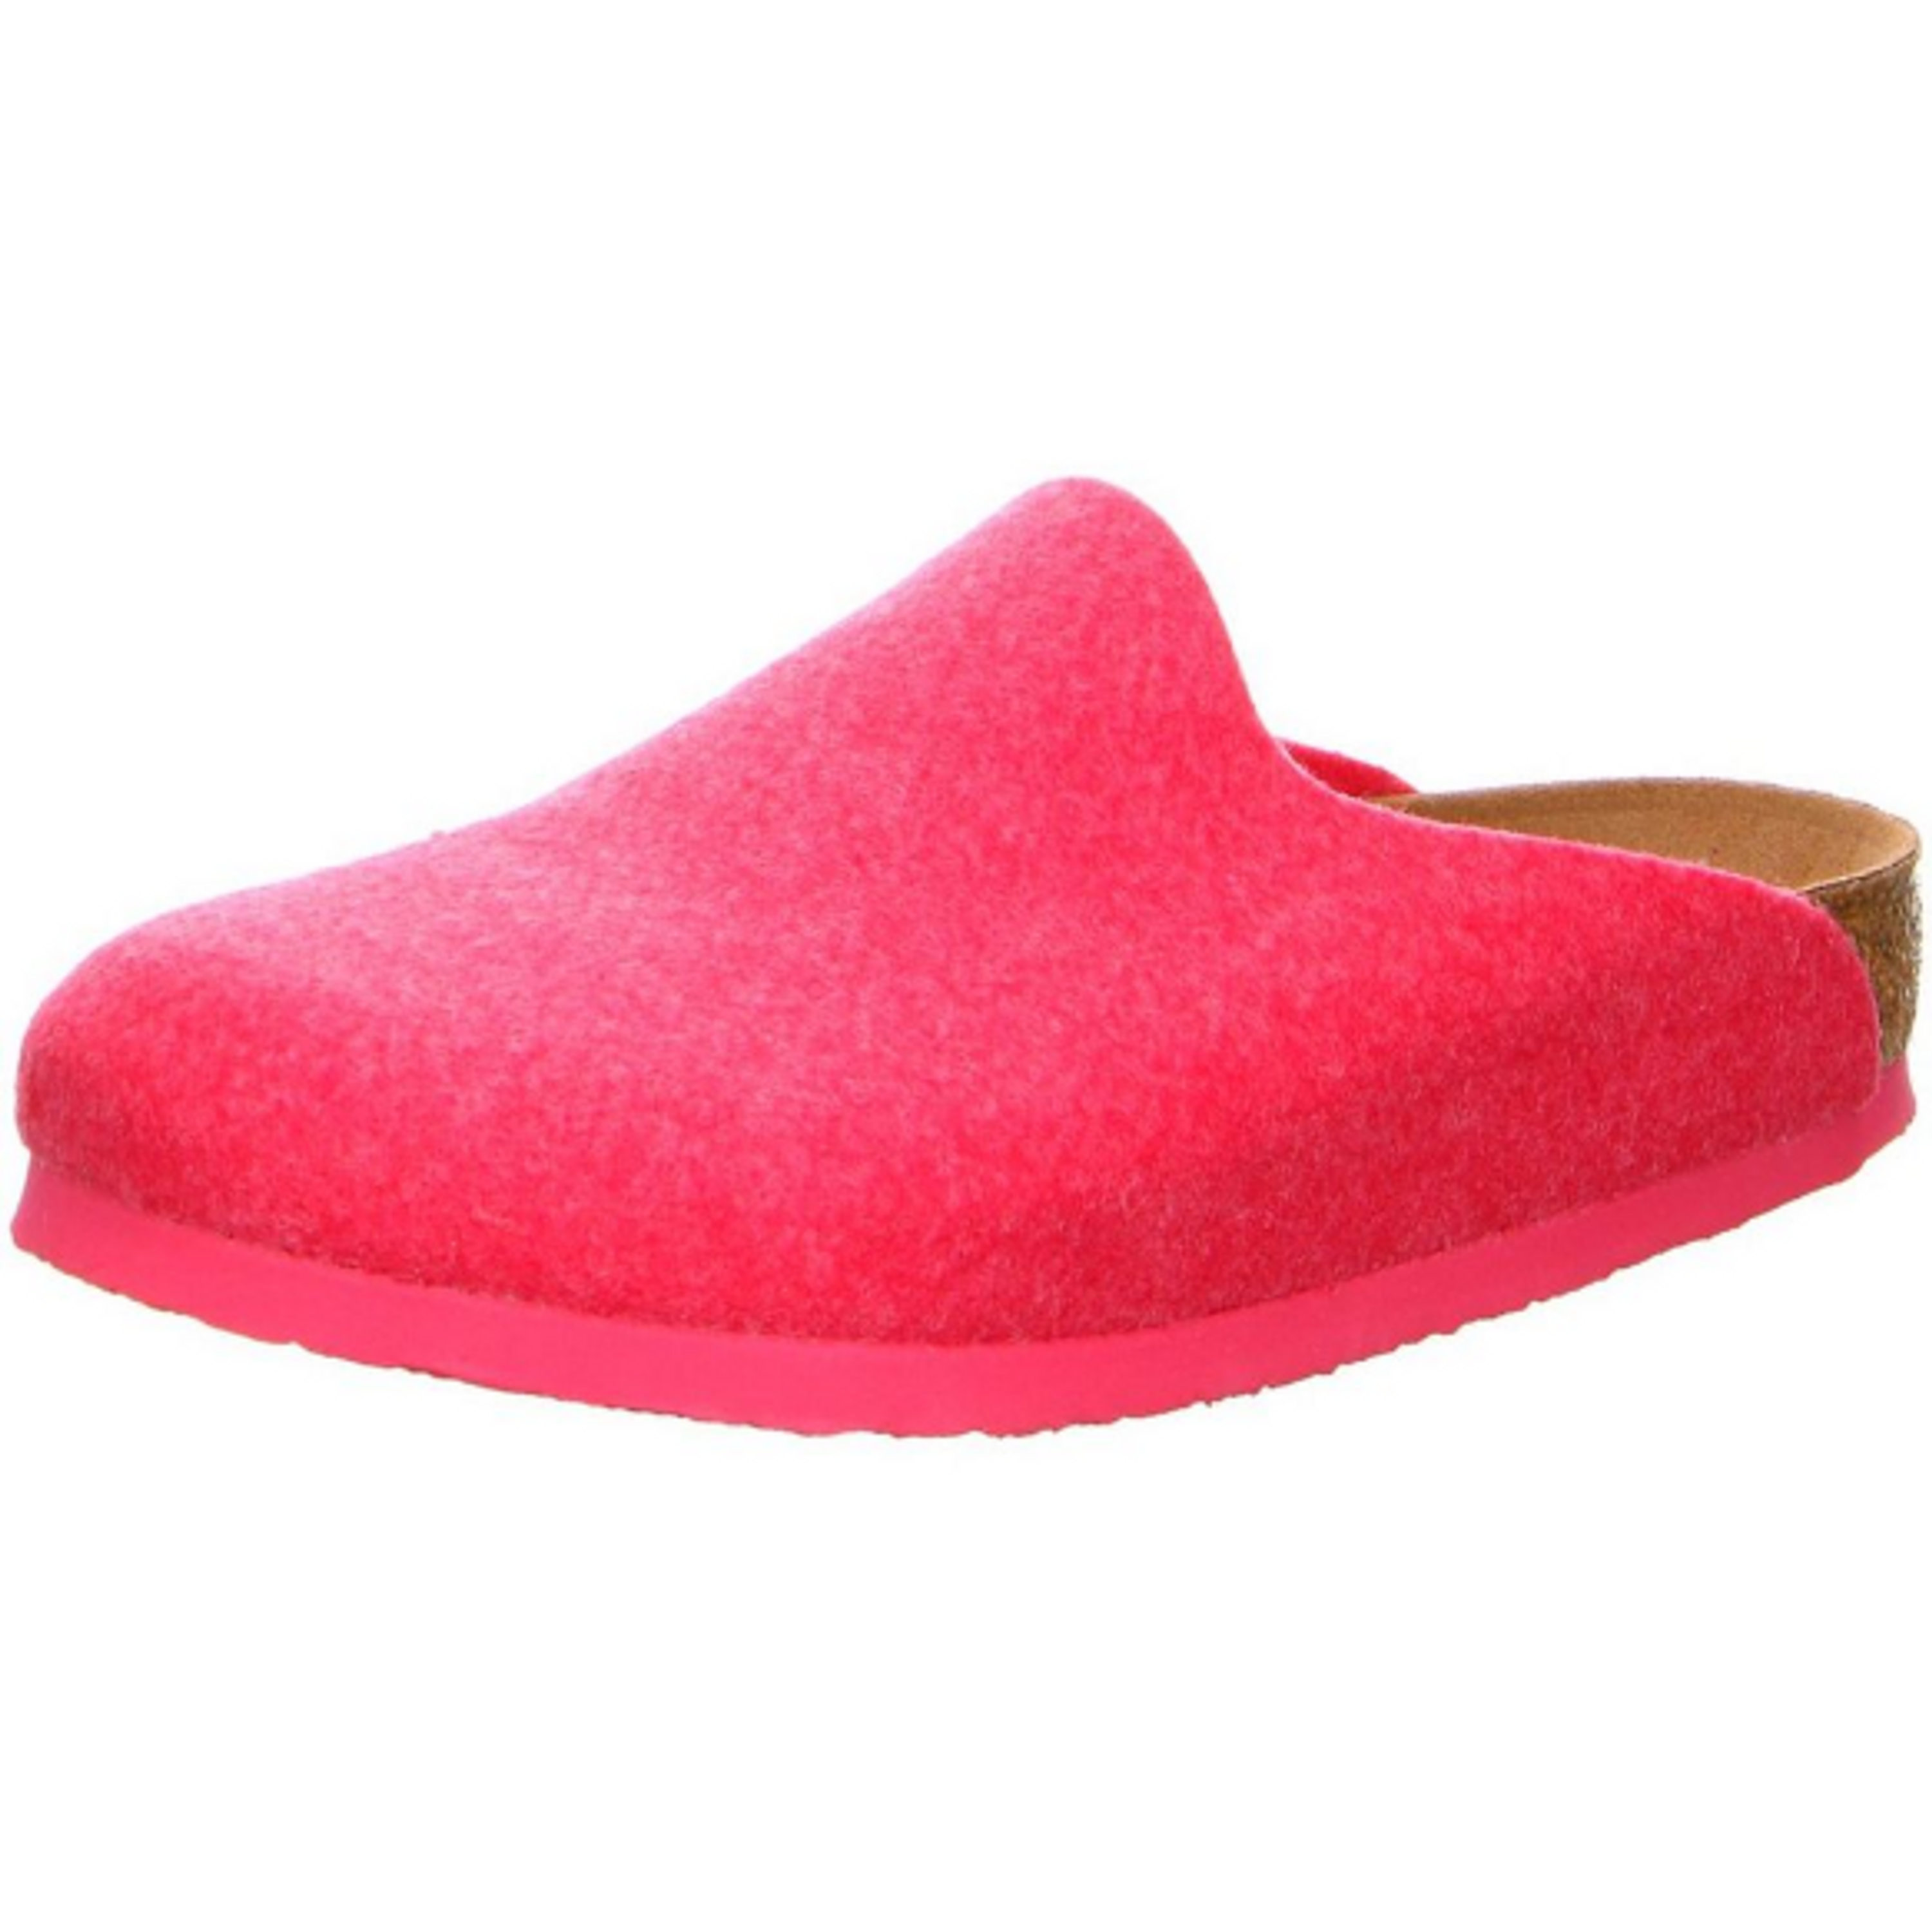 Birkenstock slippers Amsterdam vegan pink felt - Bartel-Shop